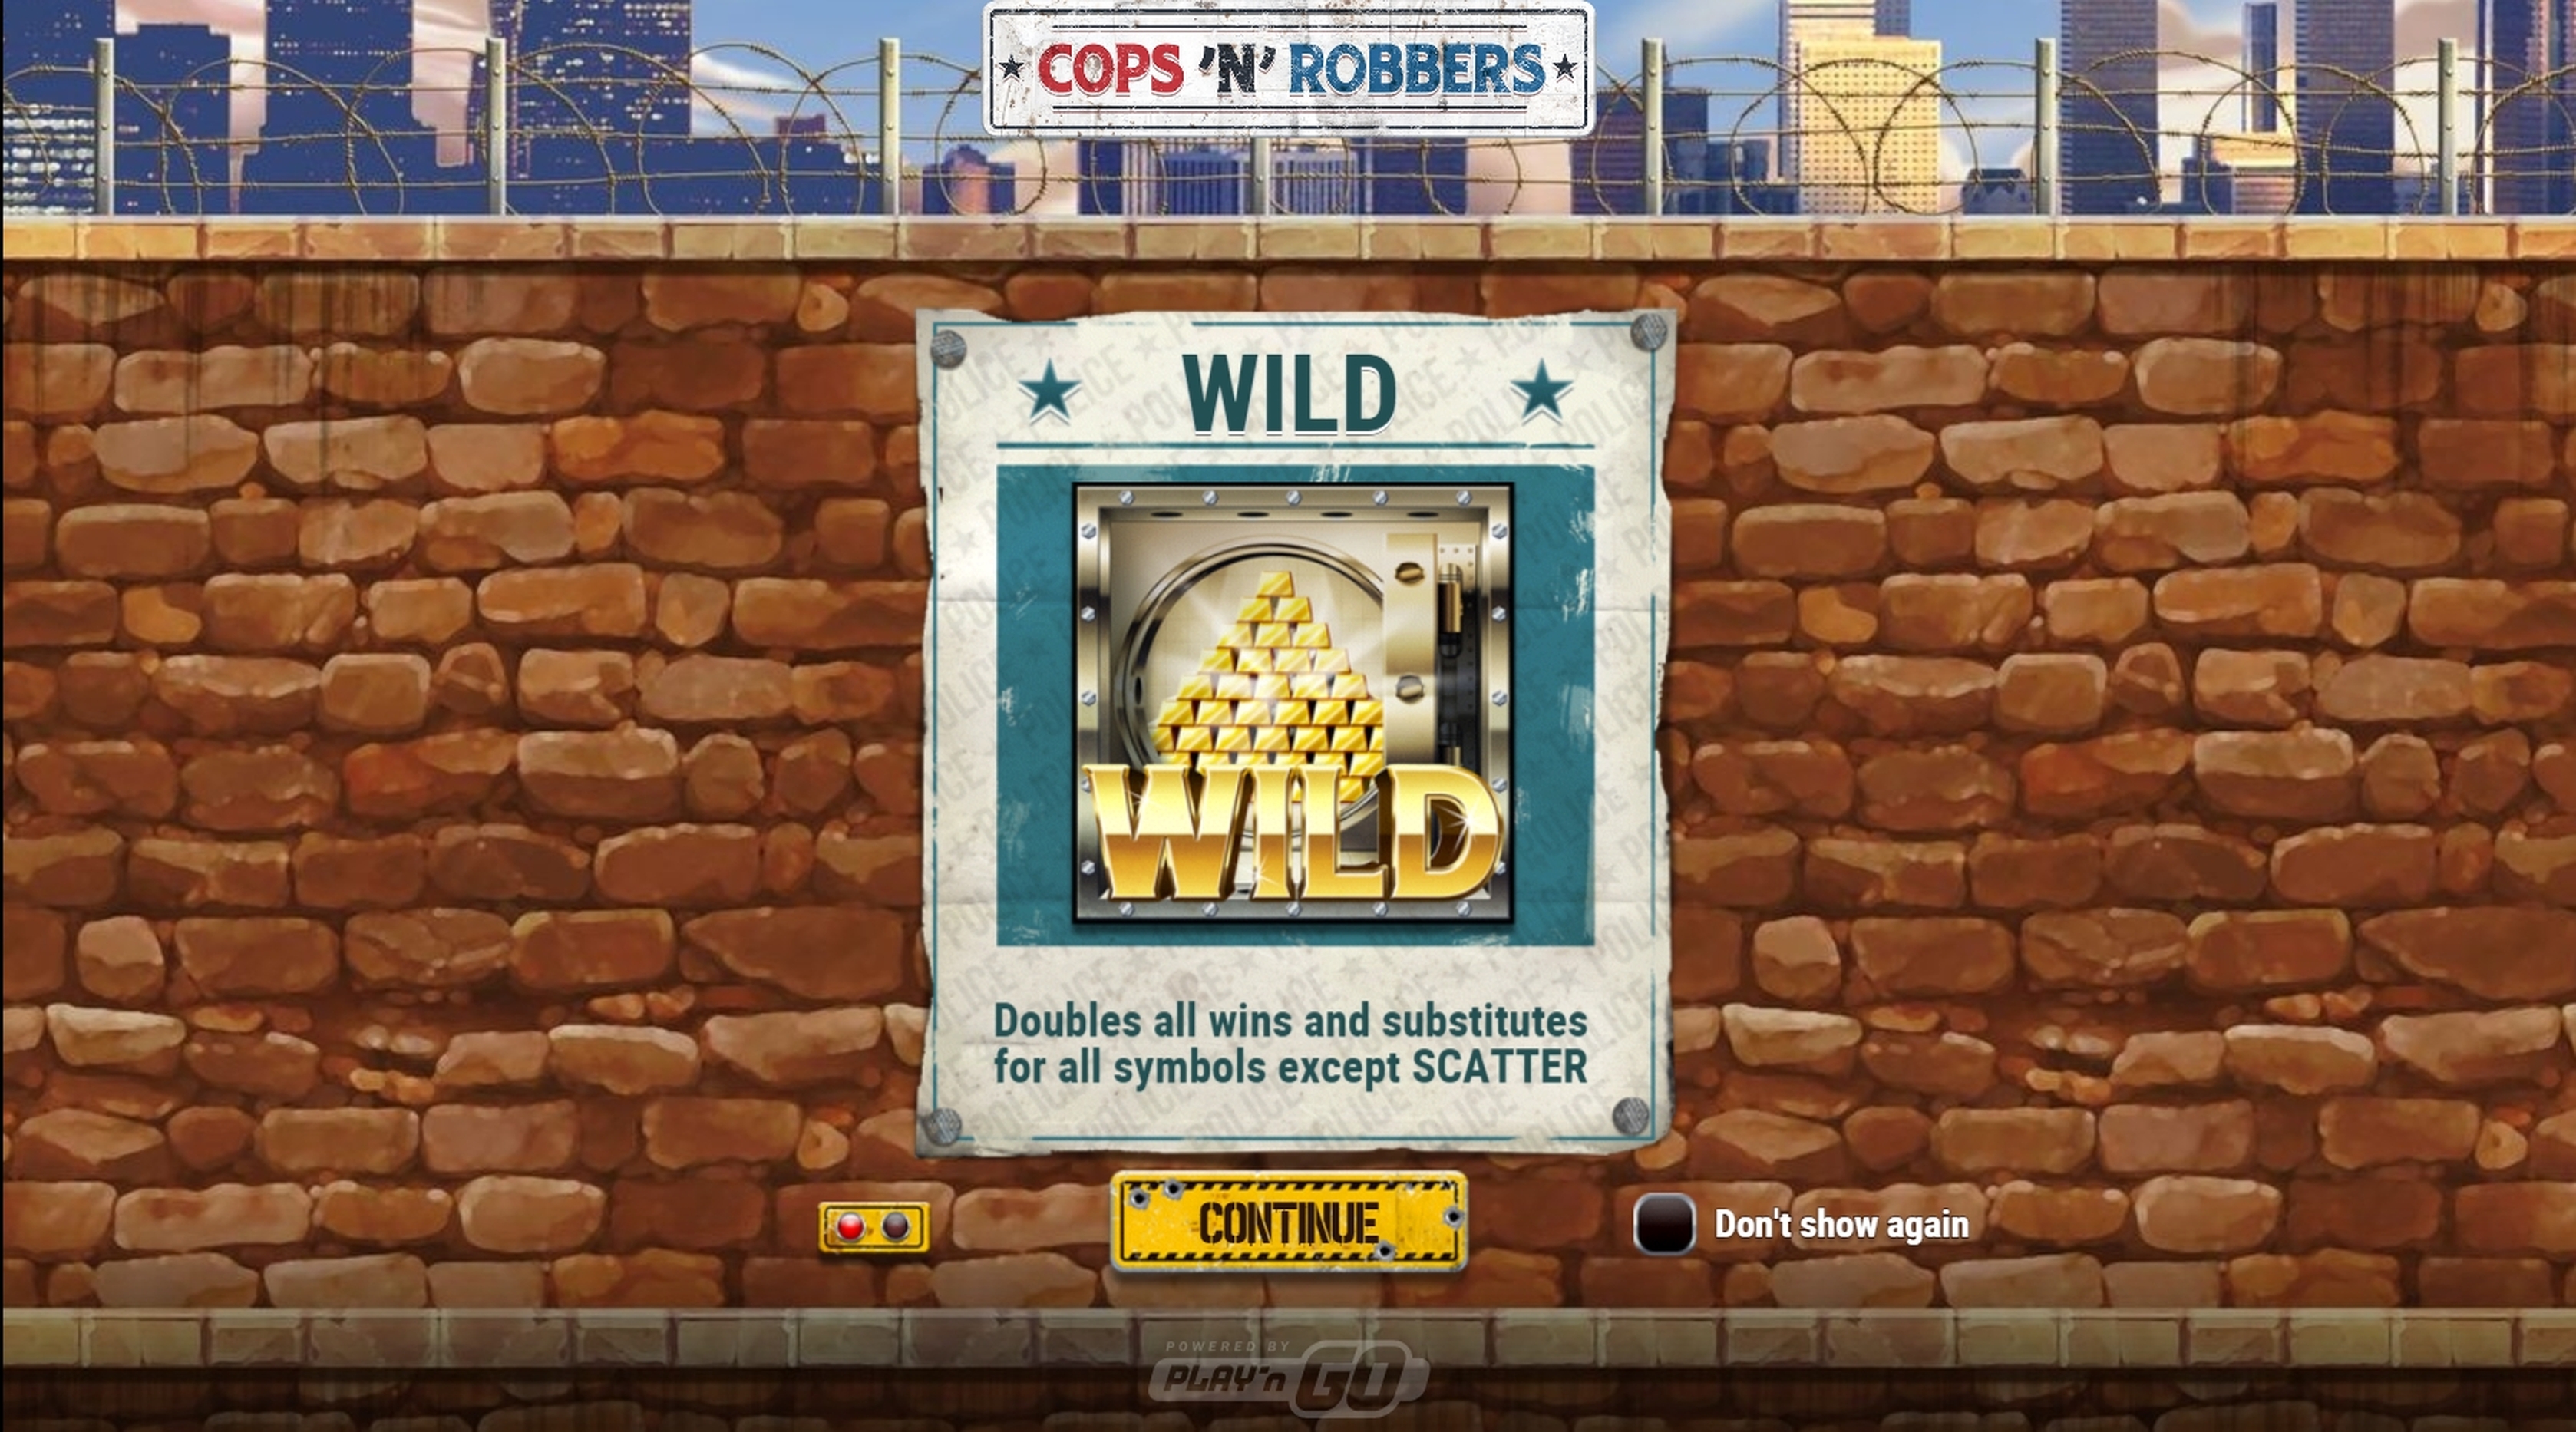 Play Cops 'N' Robbers 2018 Free Casino Slot Game by Playn GO